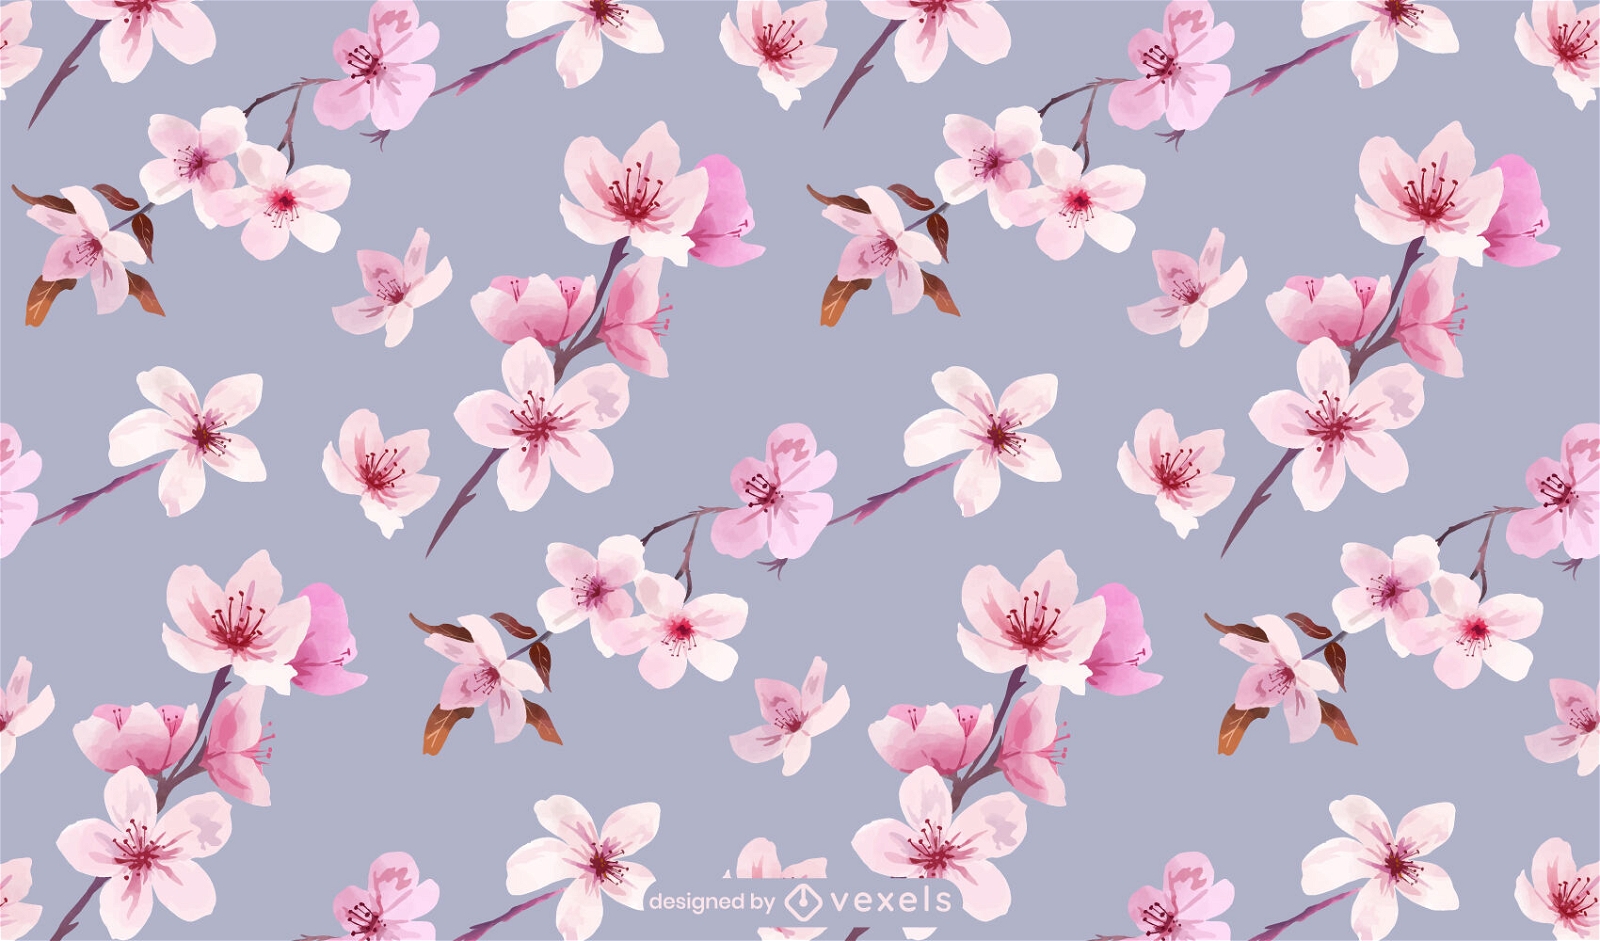 Cherry blossom flowers pattern design